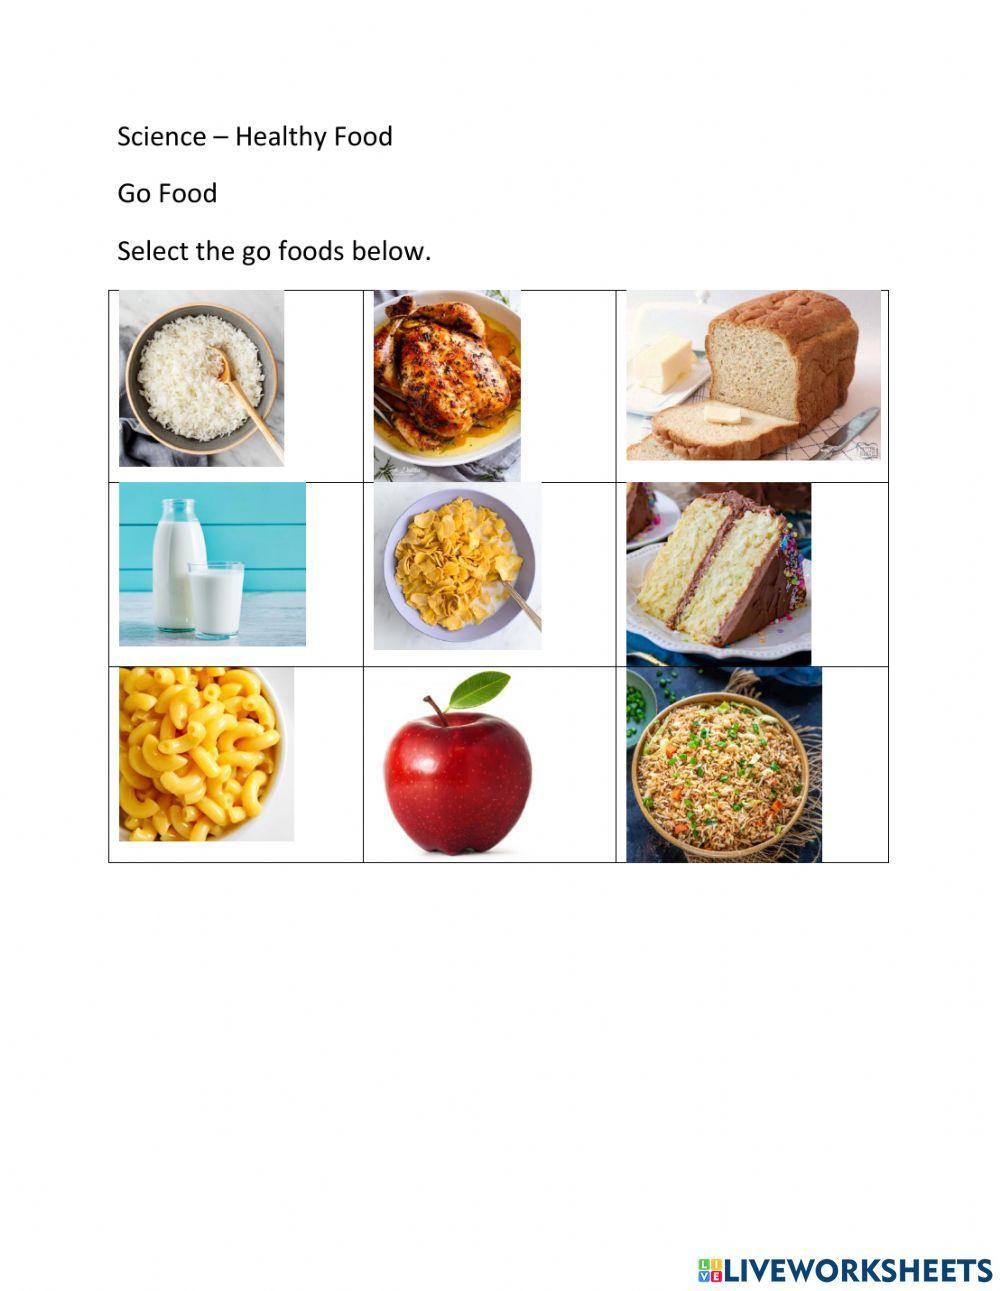 Science - go food